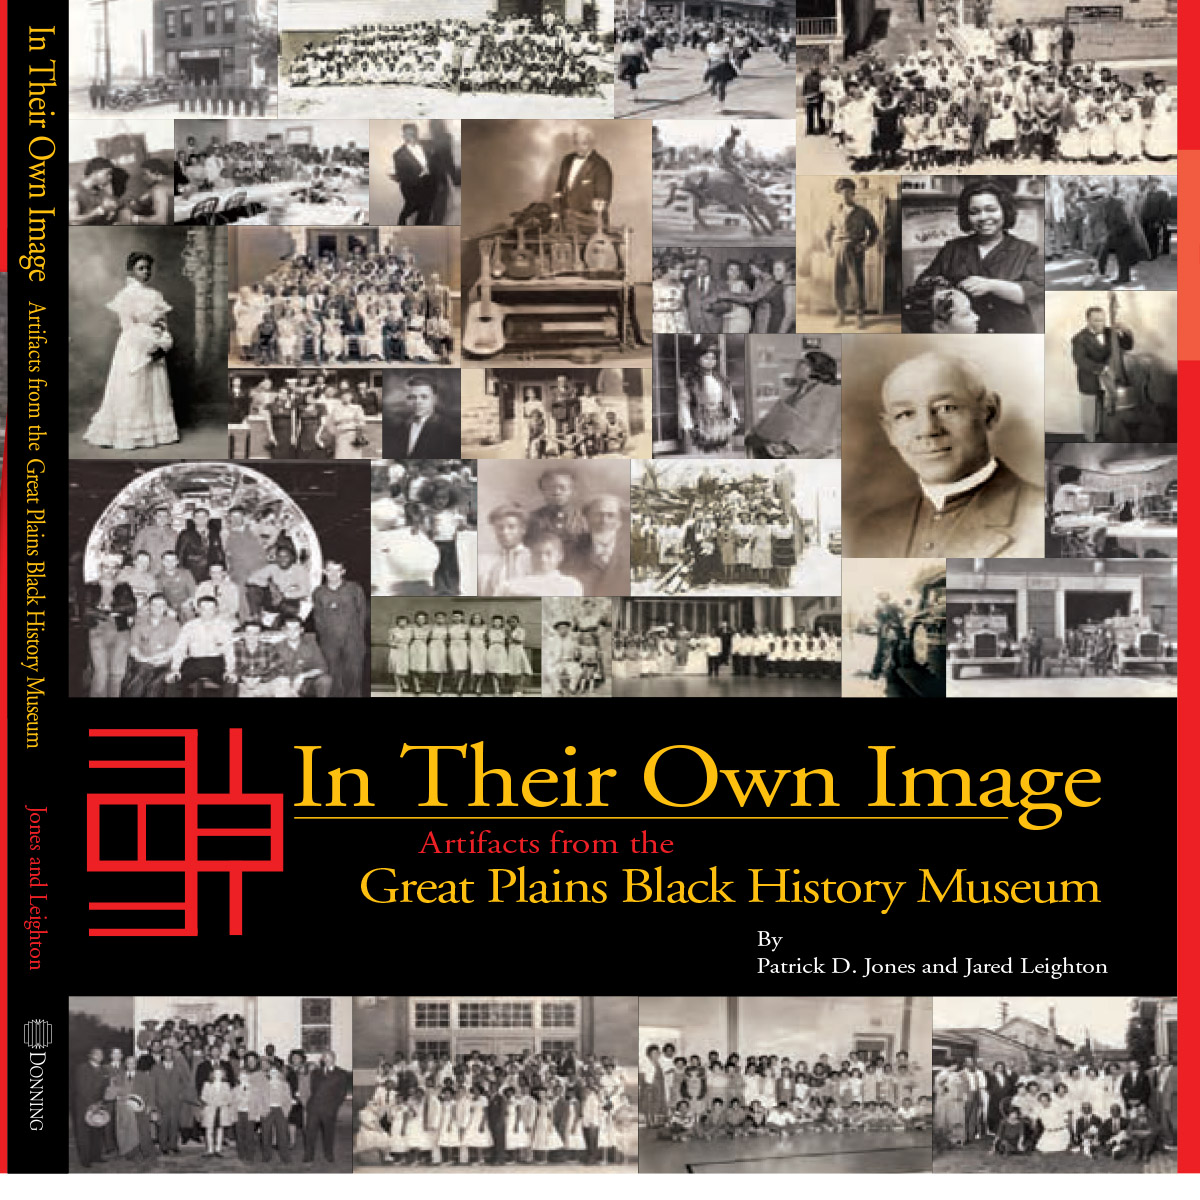 Great Plains Black History Museum Cool Wallpaper HDblackwallpaper